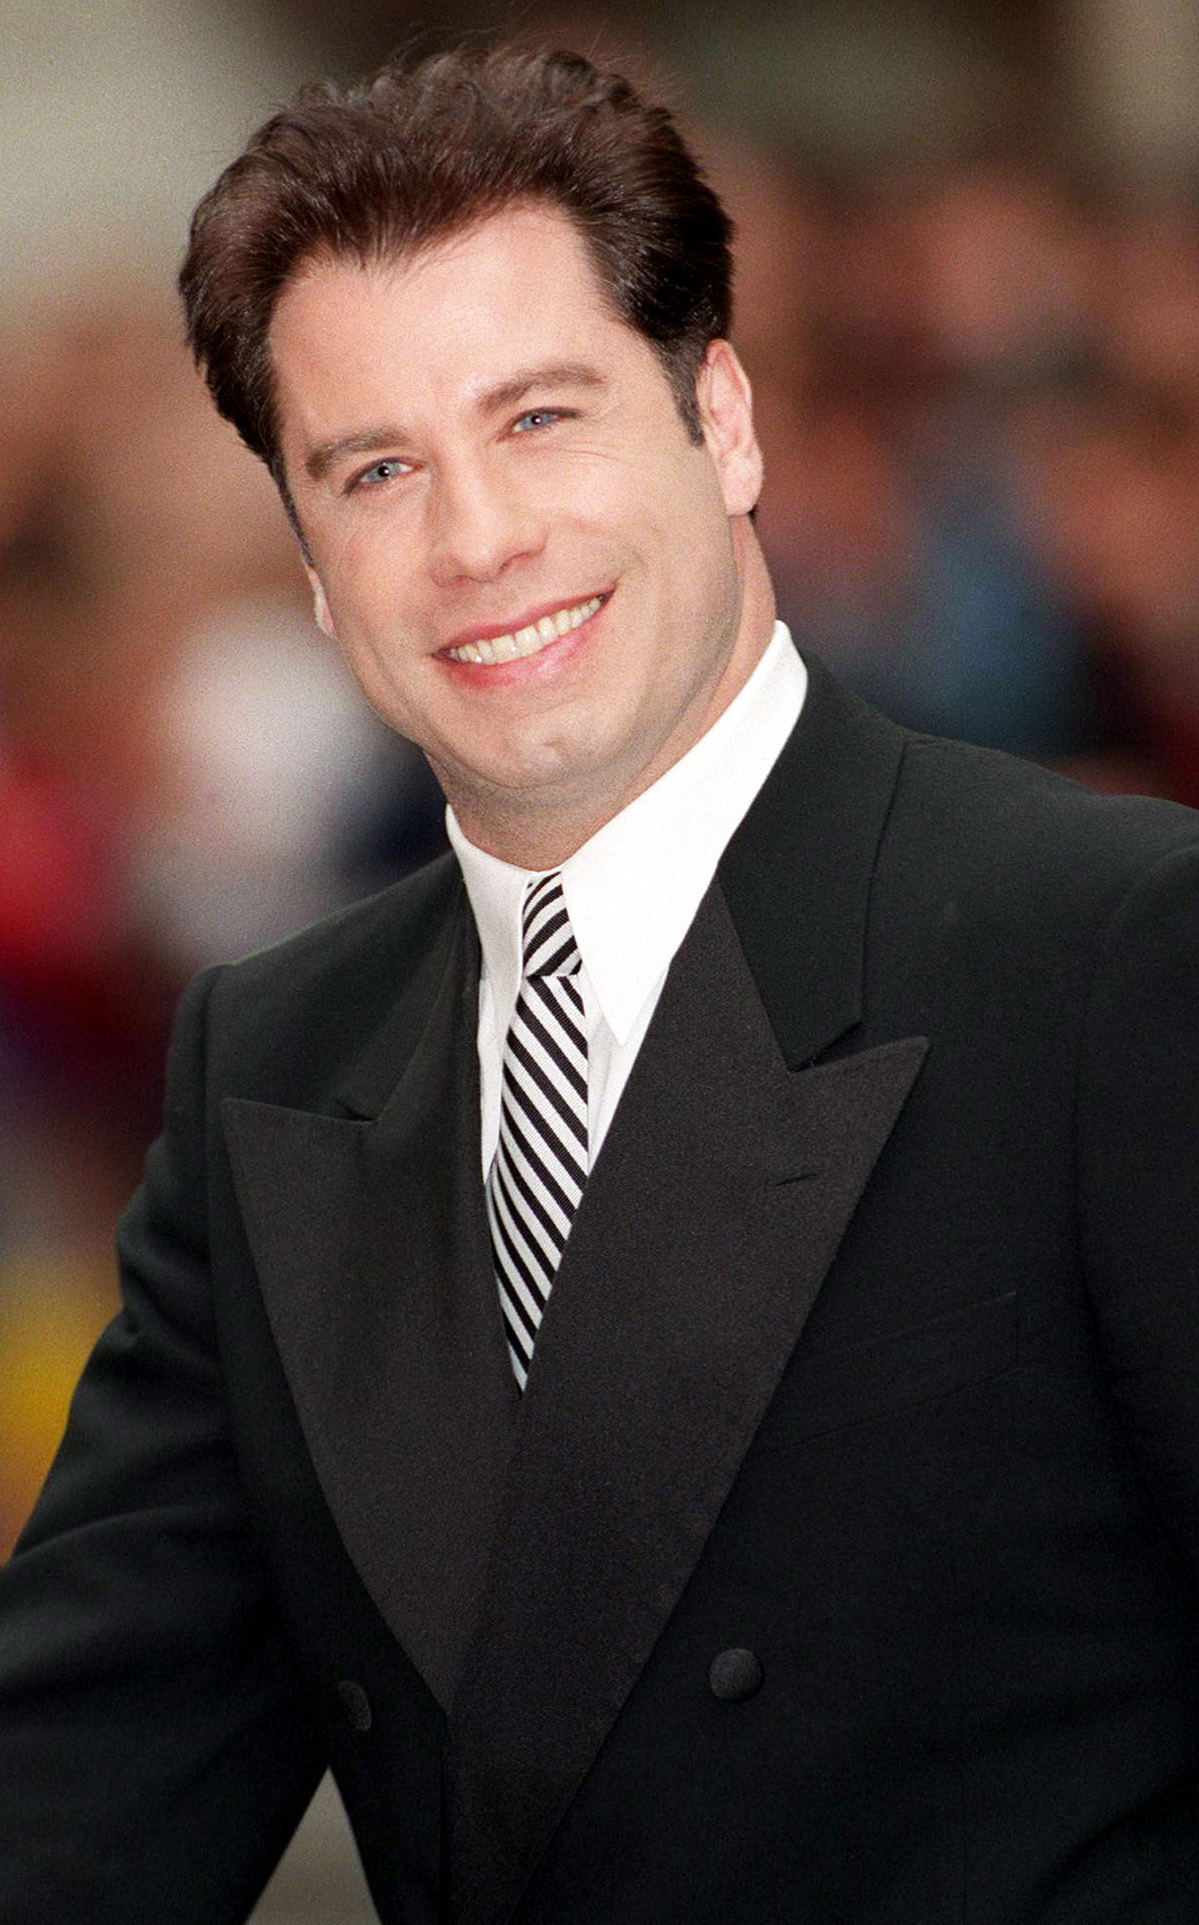 The Story of LateCareer John Travolta As Told by His LateCareer Beards